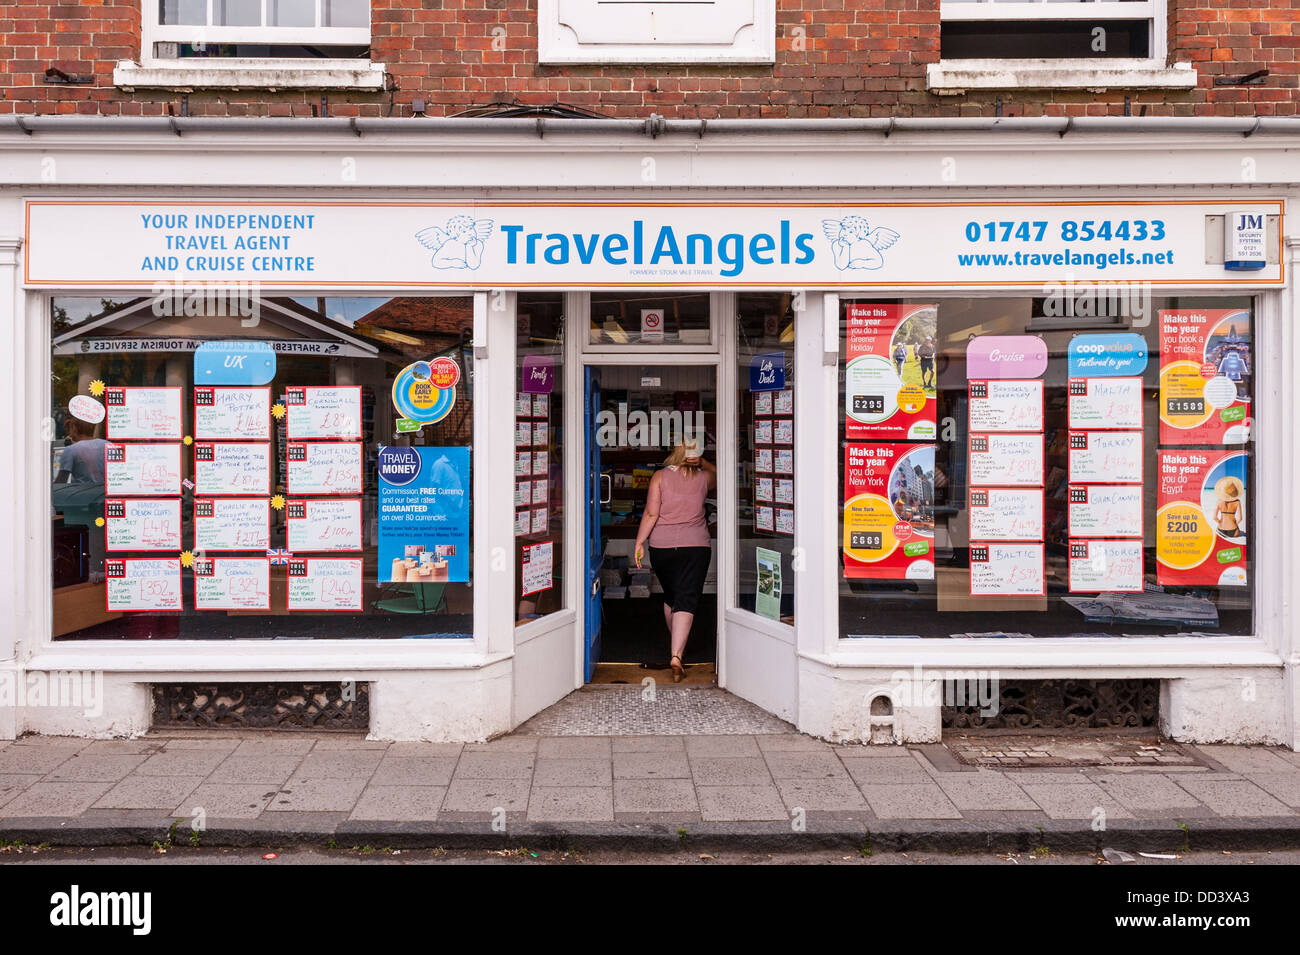 Die Engel Reisen Reisebüro in Shaftesbury, Dorset, England, Großbritannien, Uk Stockfoto